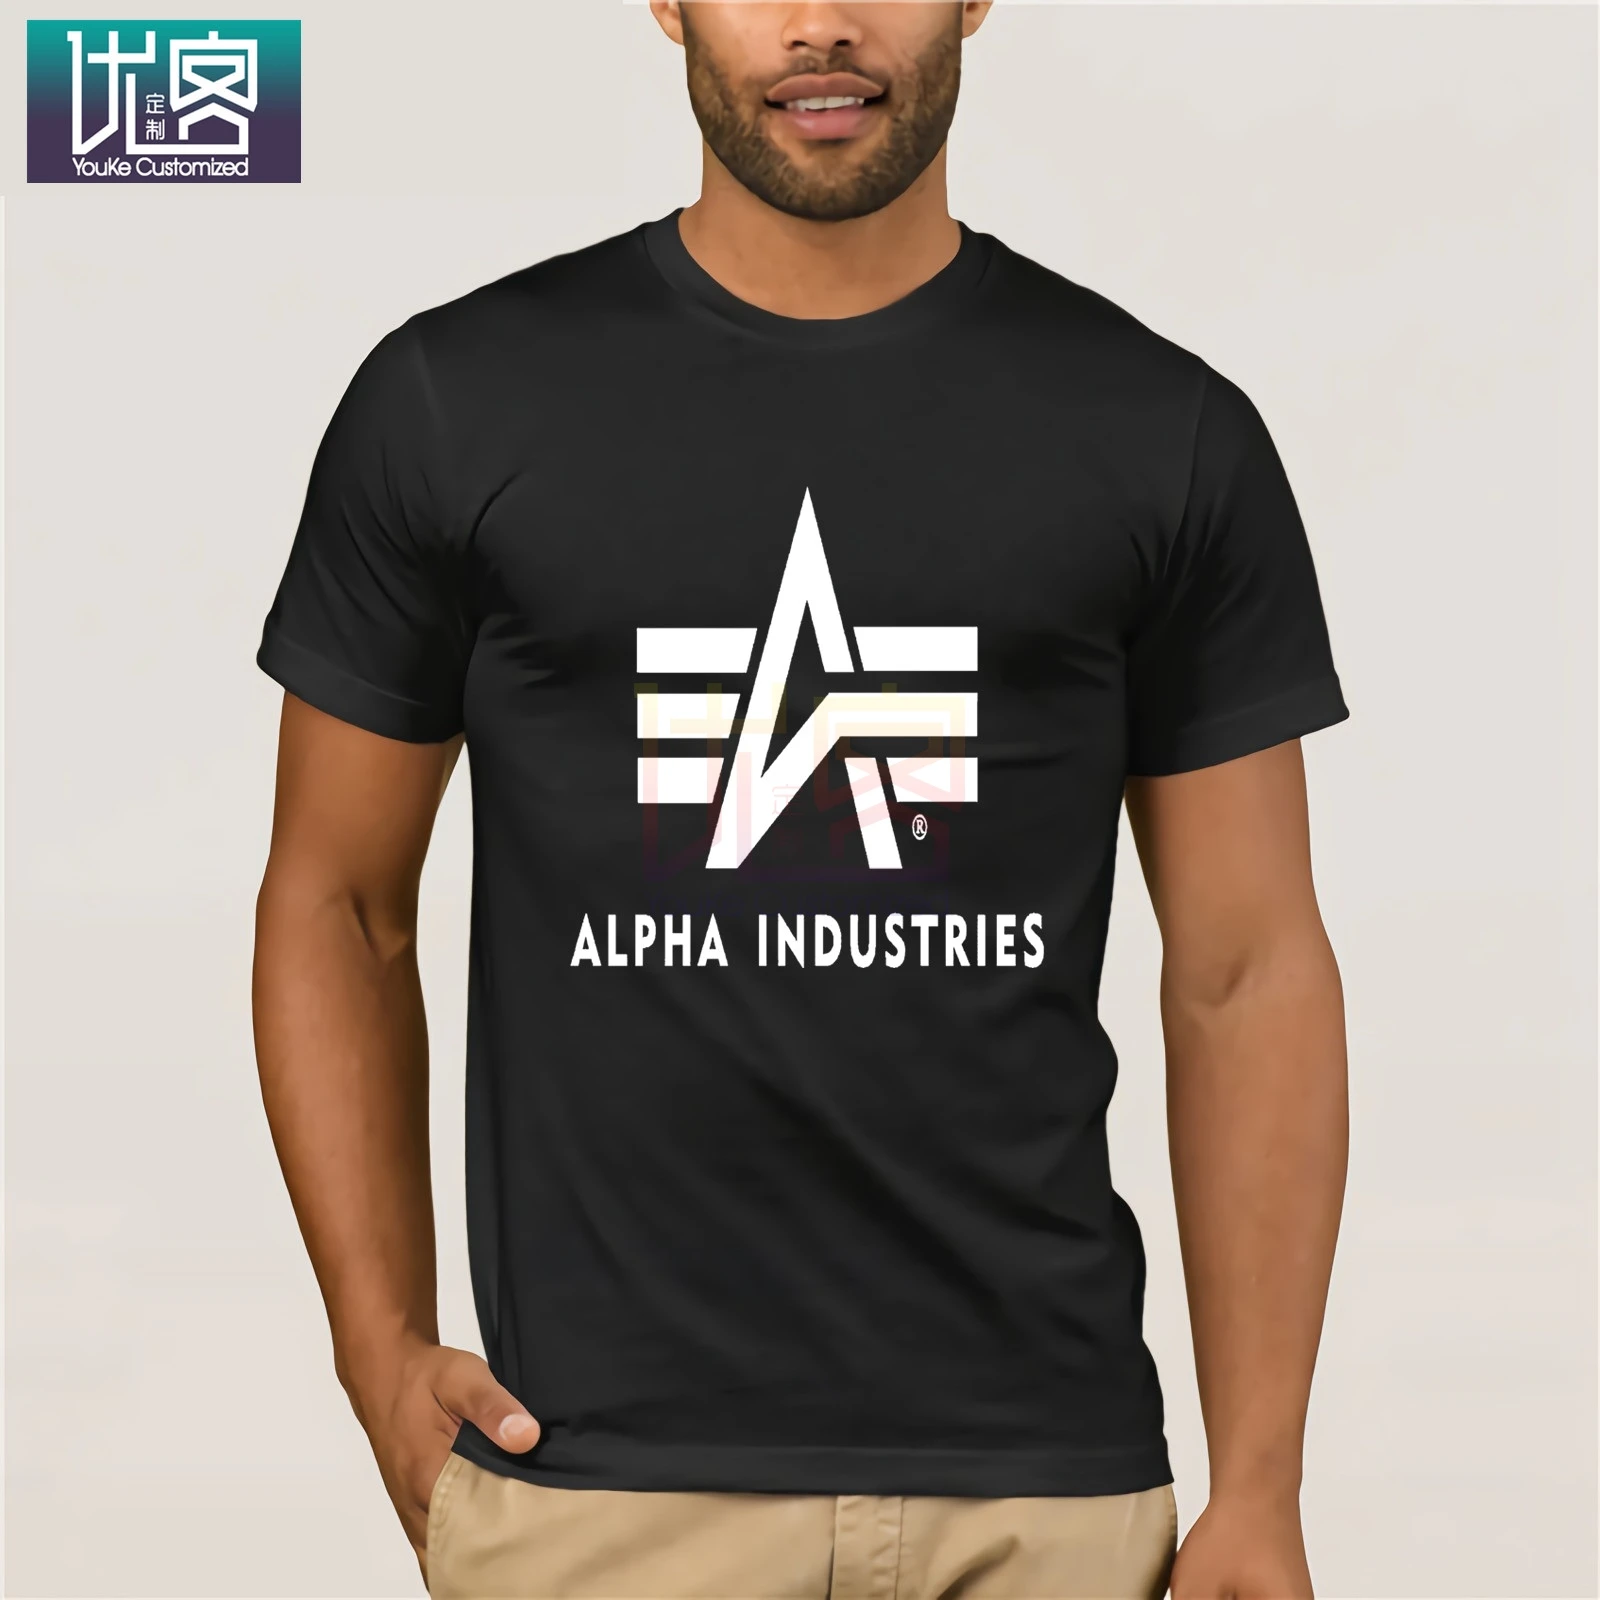 

Mens T-shirt Fashion 2019 Alpha Industries T-shirt Cotton Short Sleeves Tee Shirt Casual Tee Shirt Summer hipste Tees